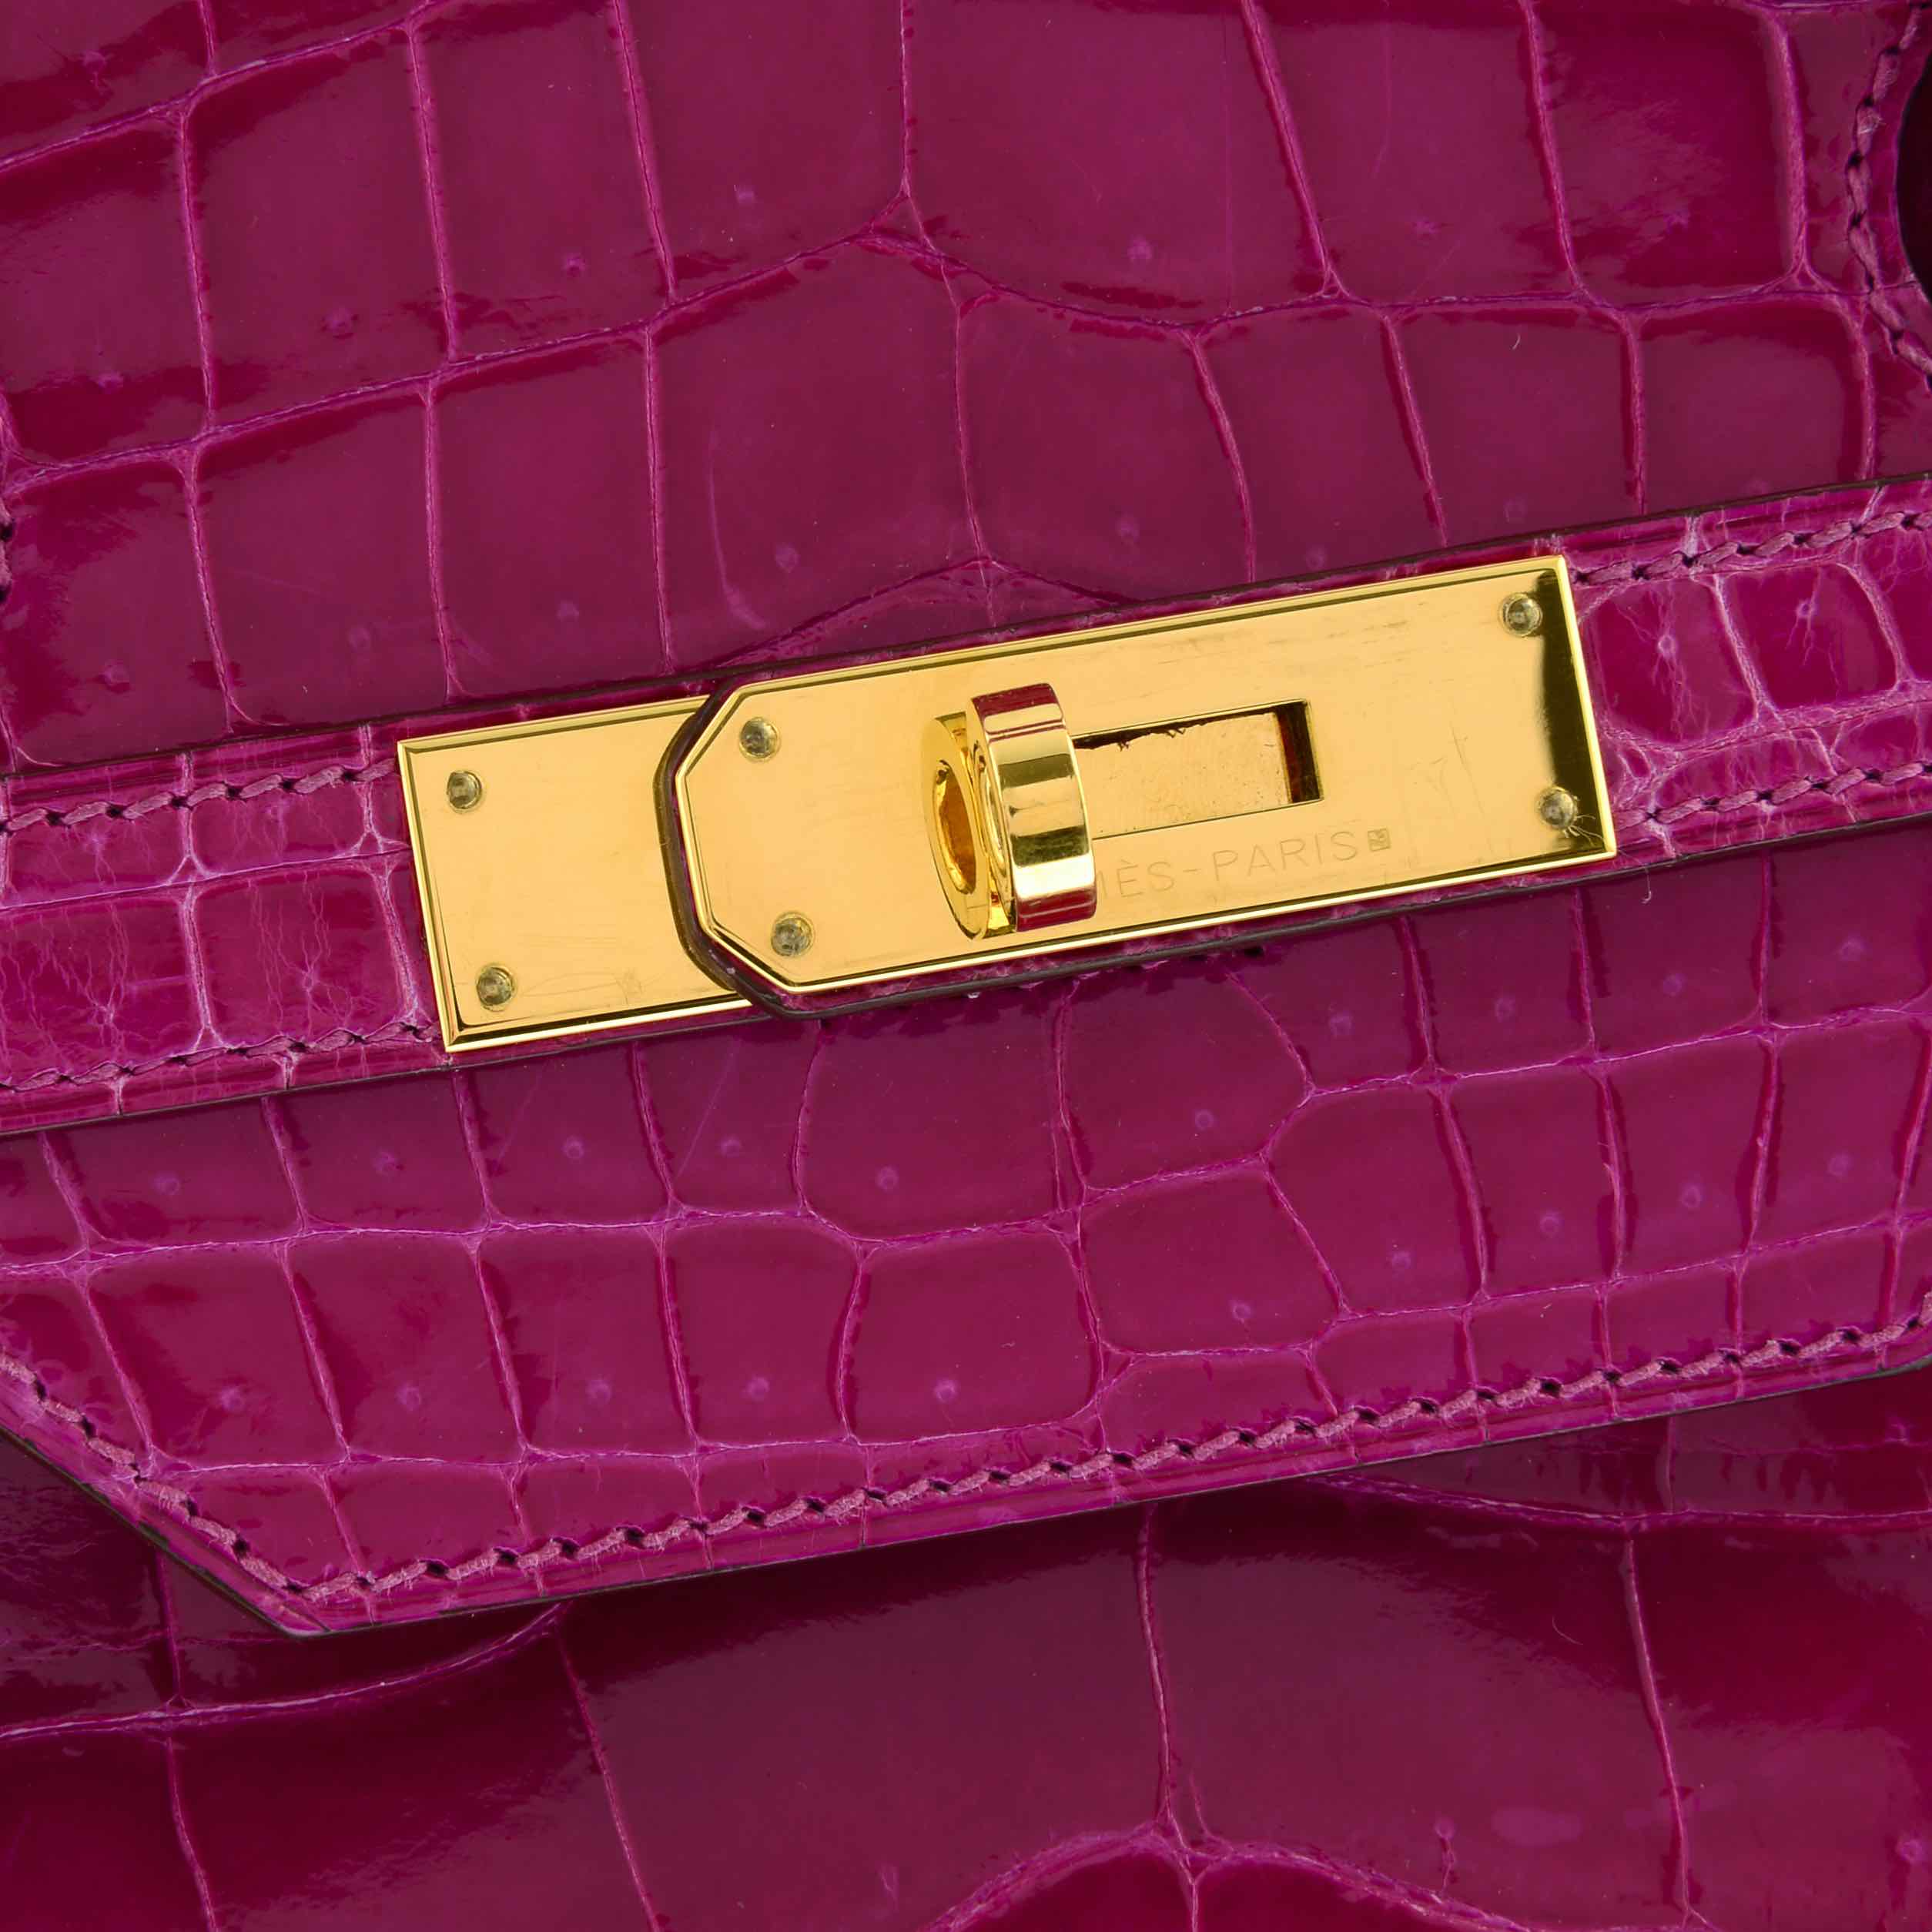 Pink Hermès Birkin handbag sells for just under £20,000 at UK